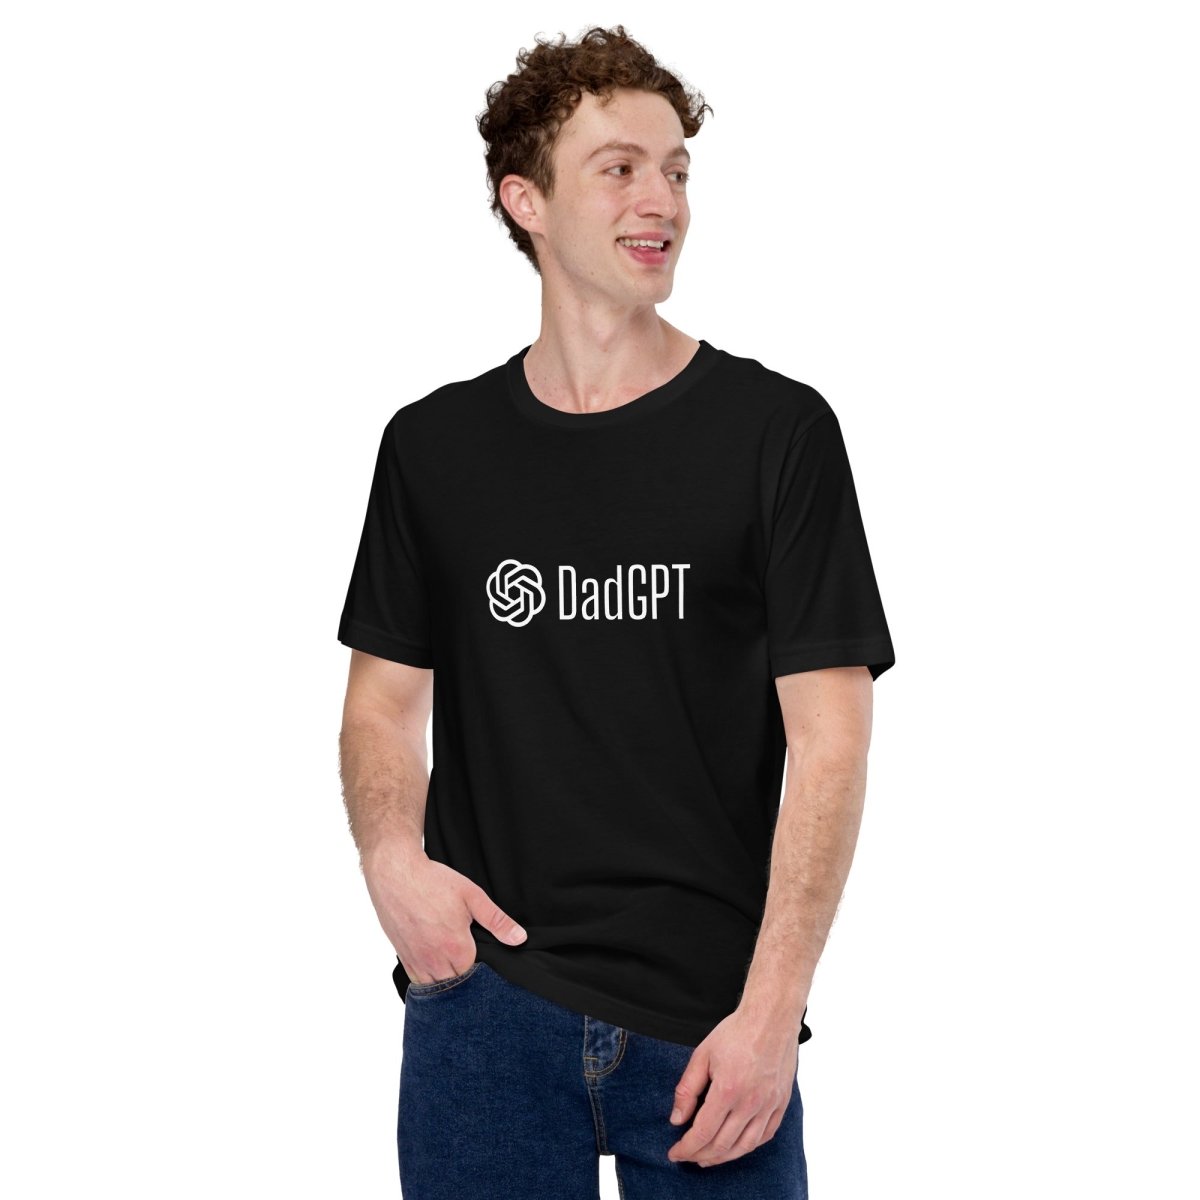 DadGPT T-Shirt 4 (unisex) - AI Store